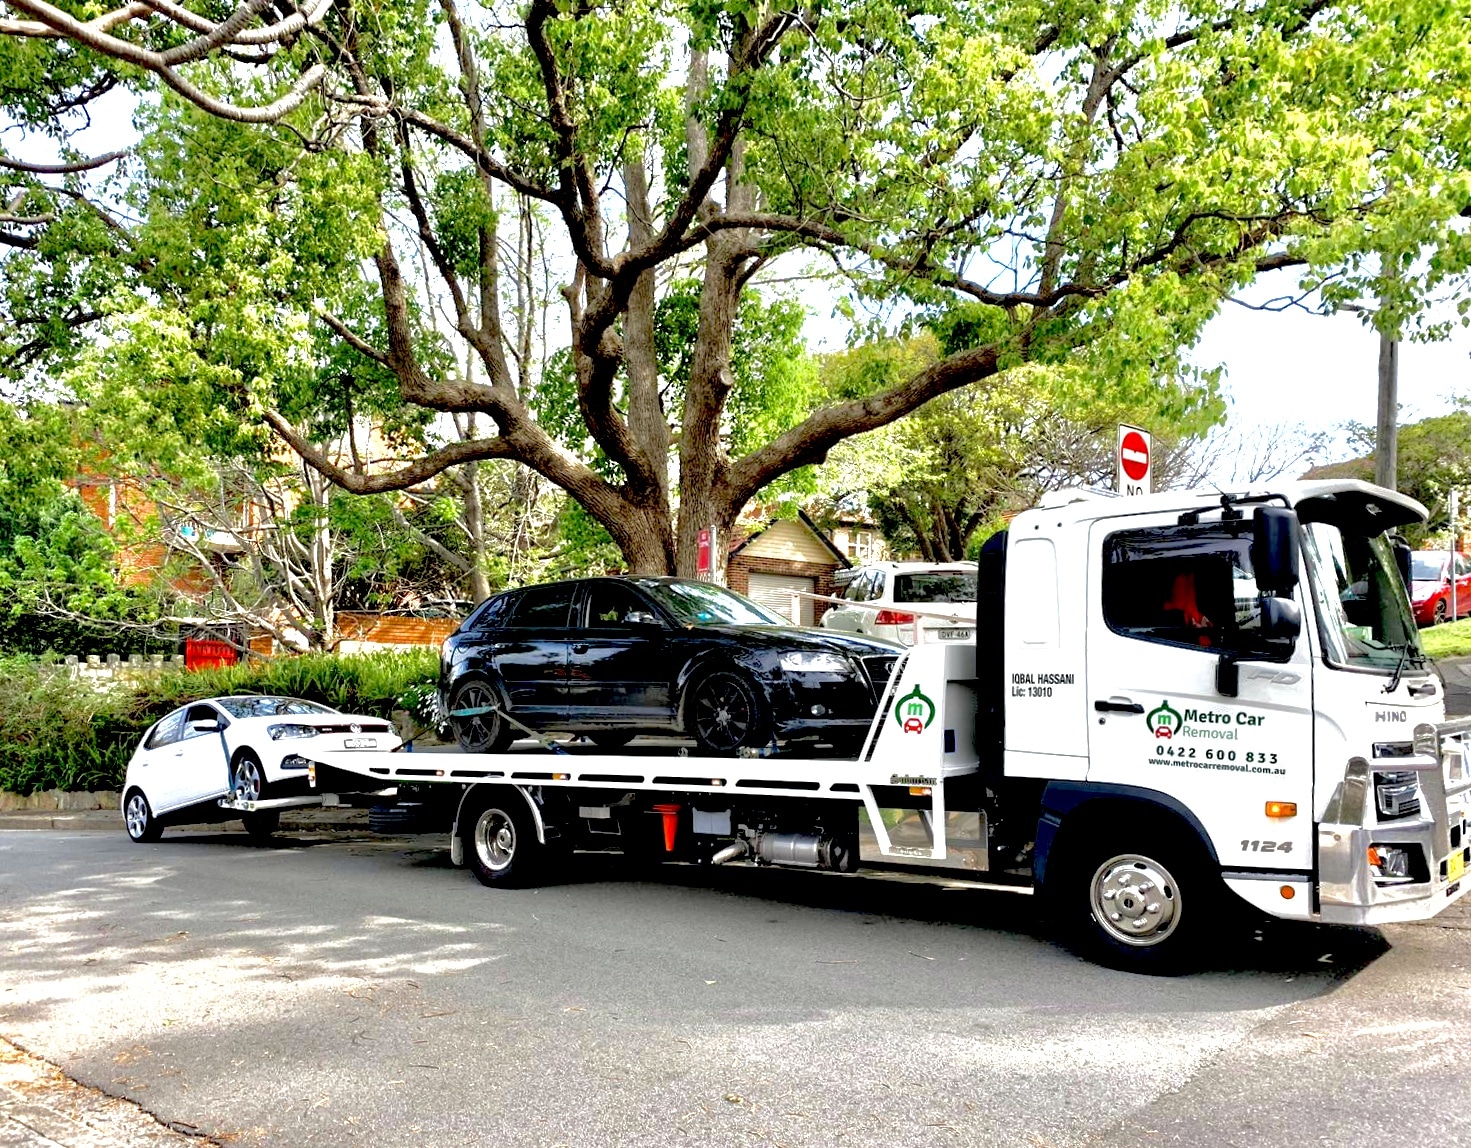 Car Removal Sydney